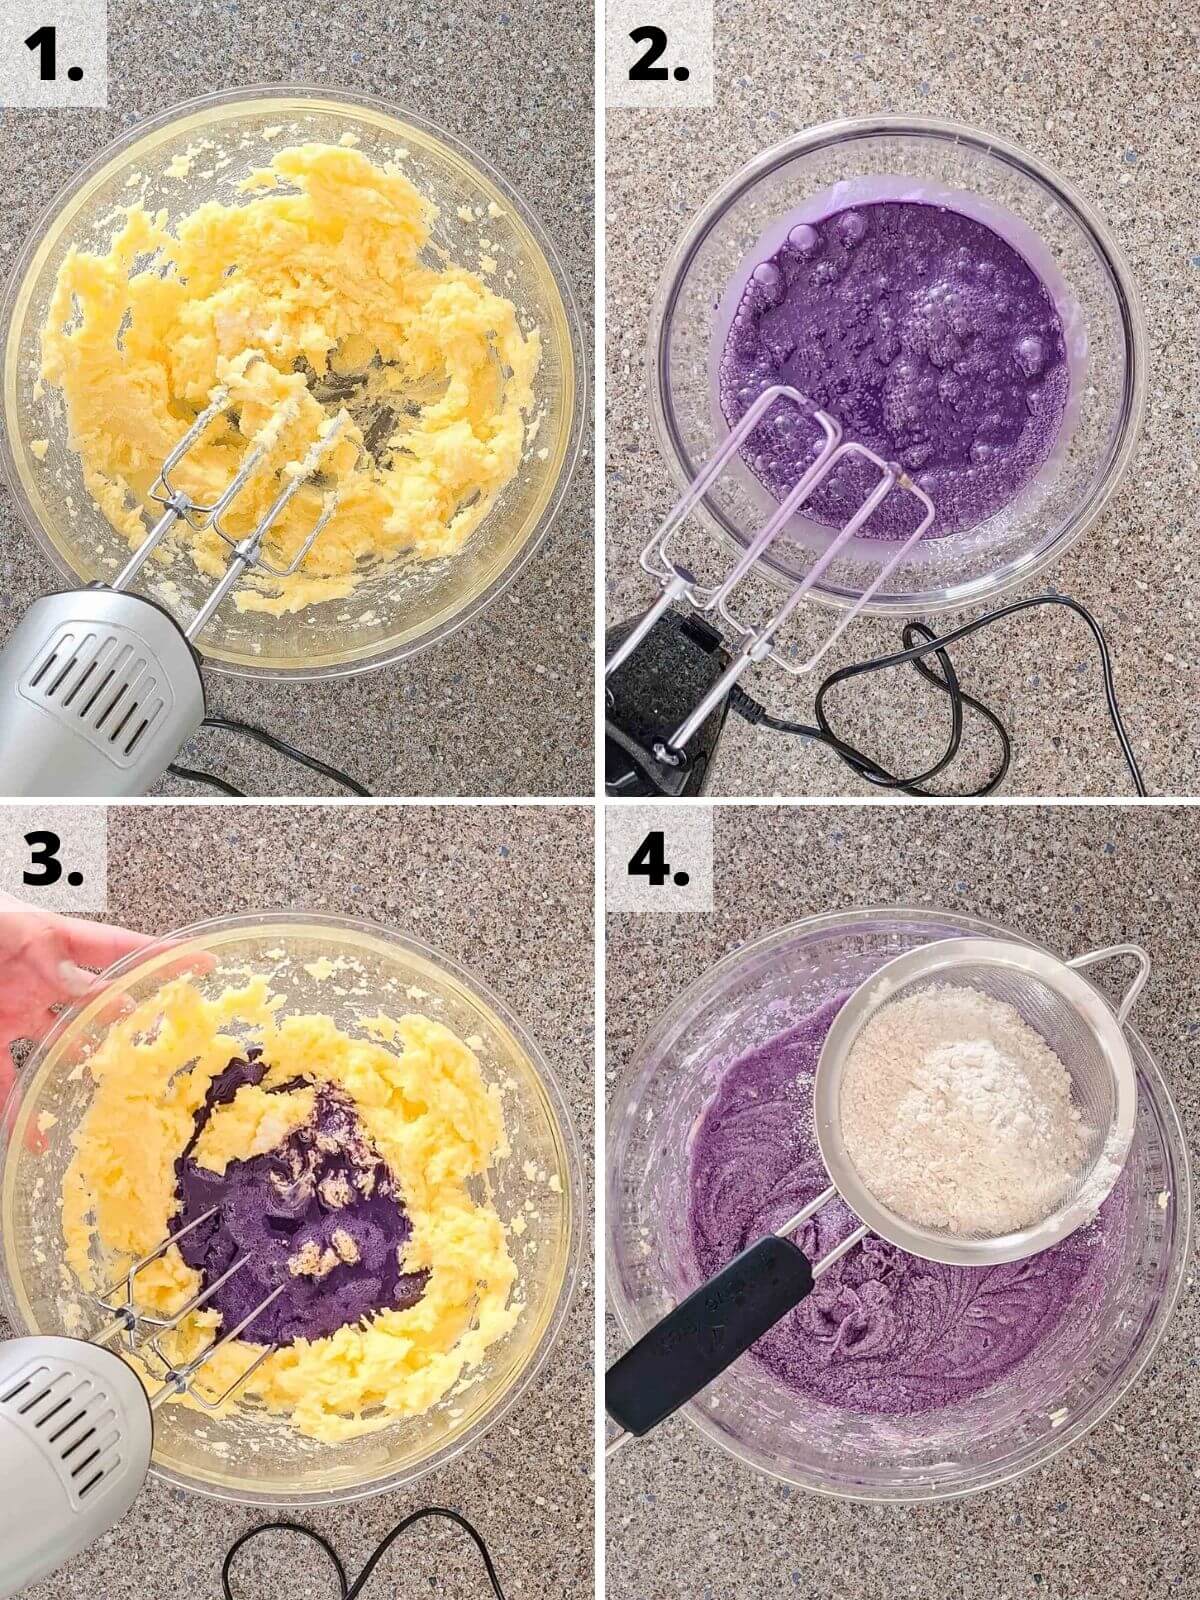 how to make purple yam ube cake recipe method steps 1 to 4.